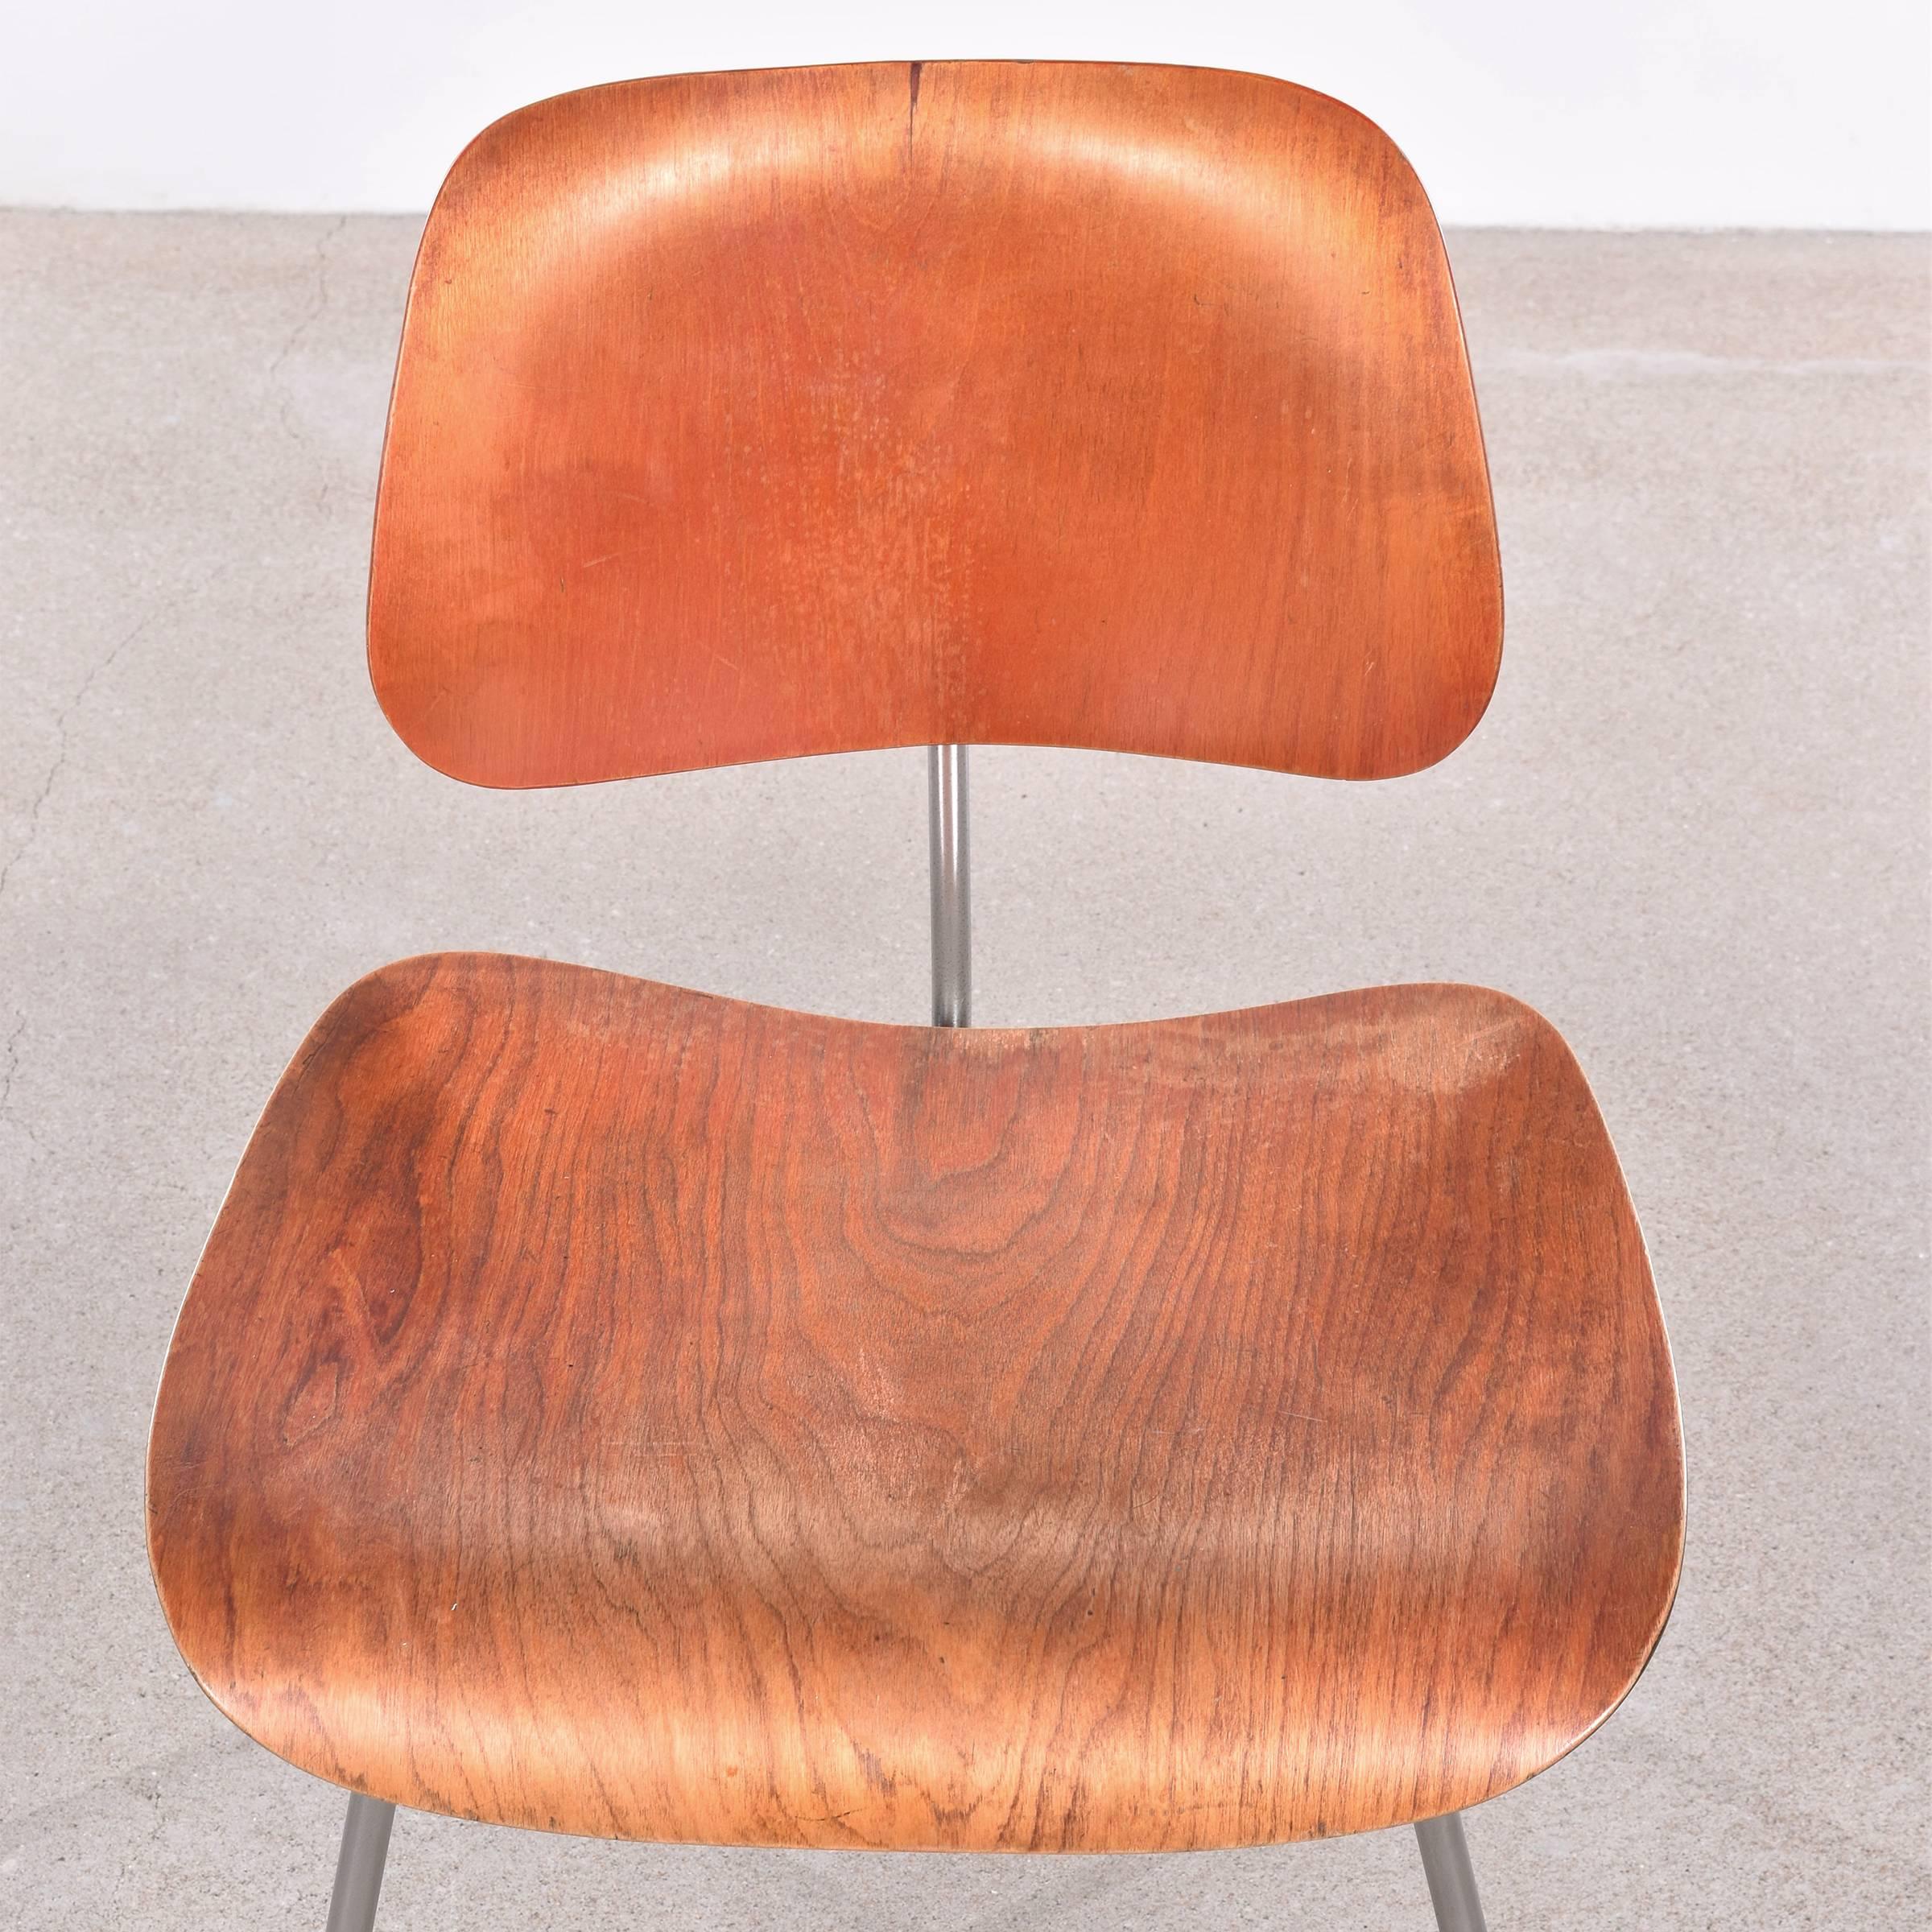 Metal Eames DCM Red Aniline Dye Side Chair Herman Miller, USA